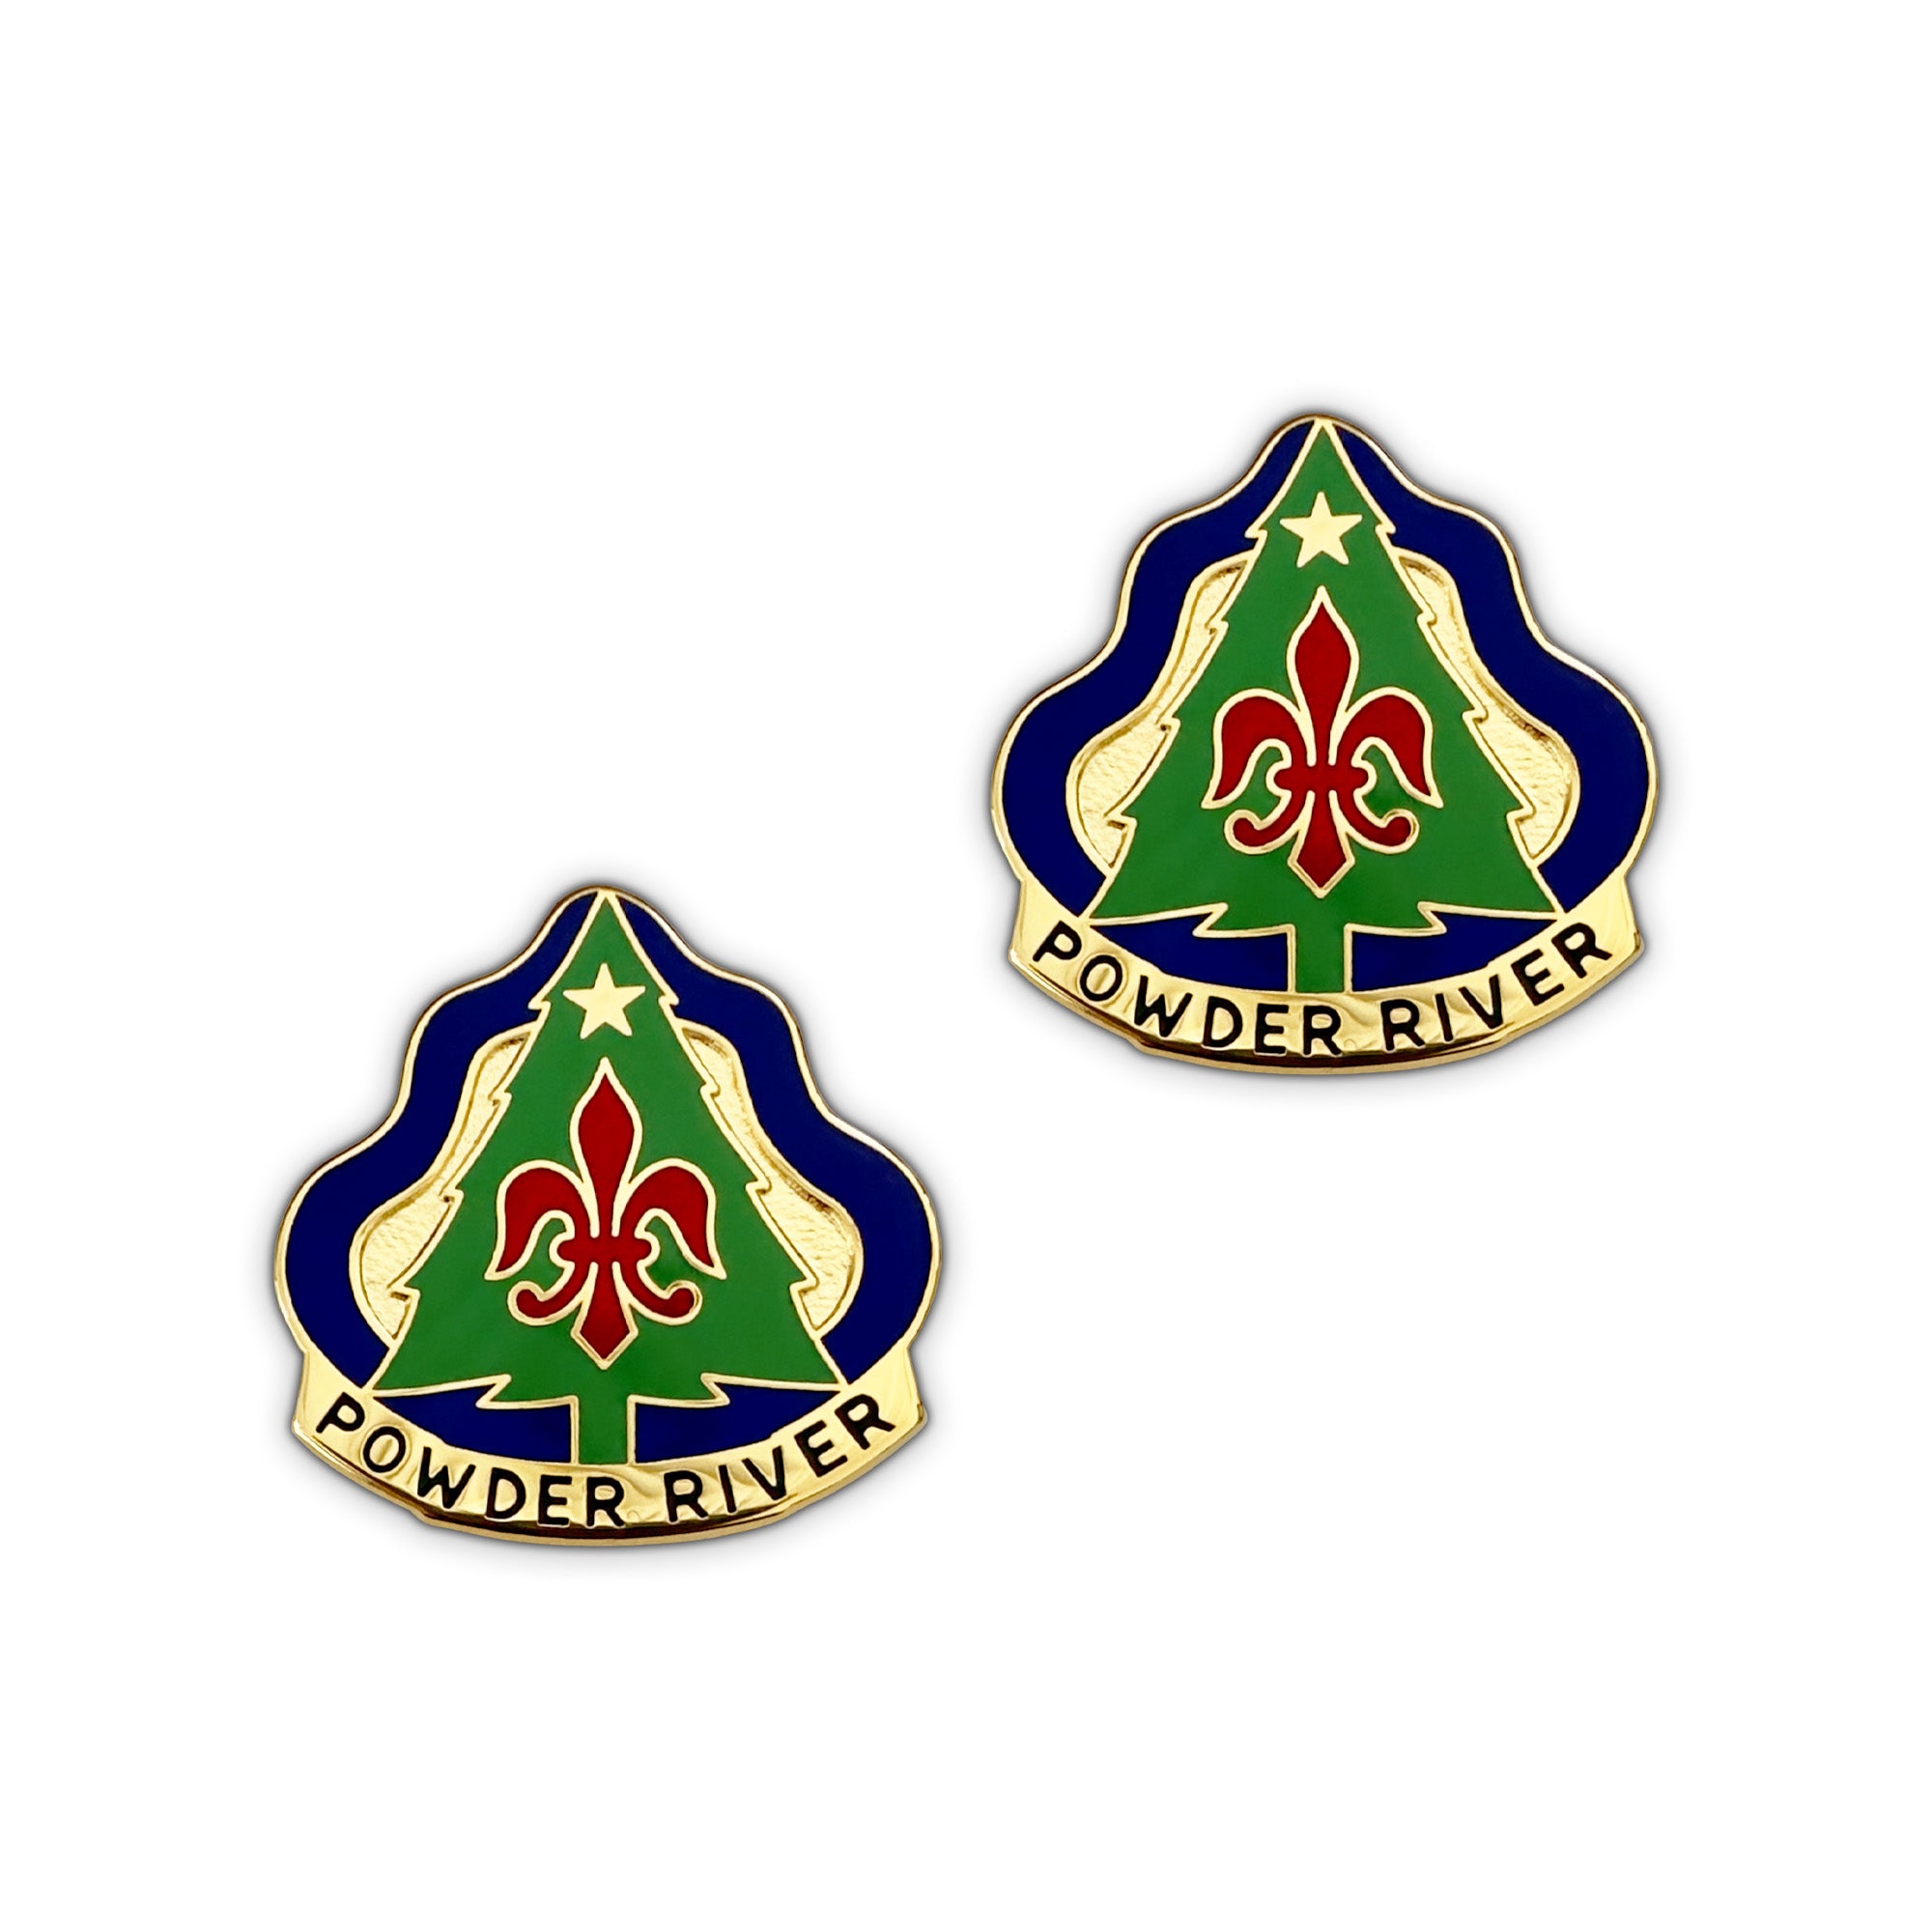 91st Training Division Unit Crest "Powder River" (pair).